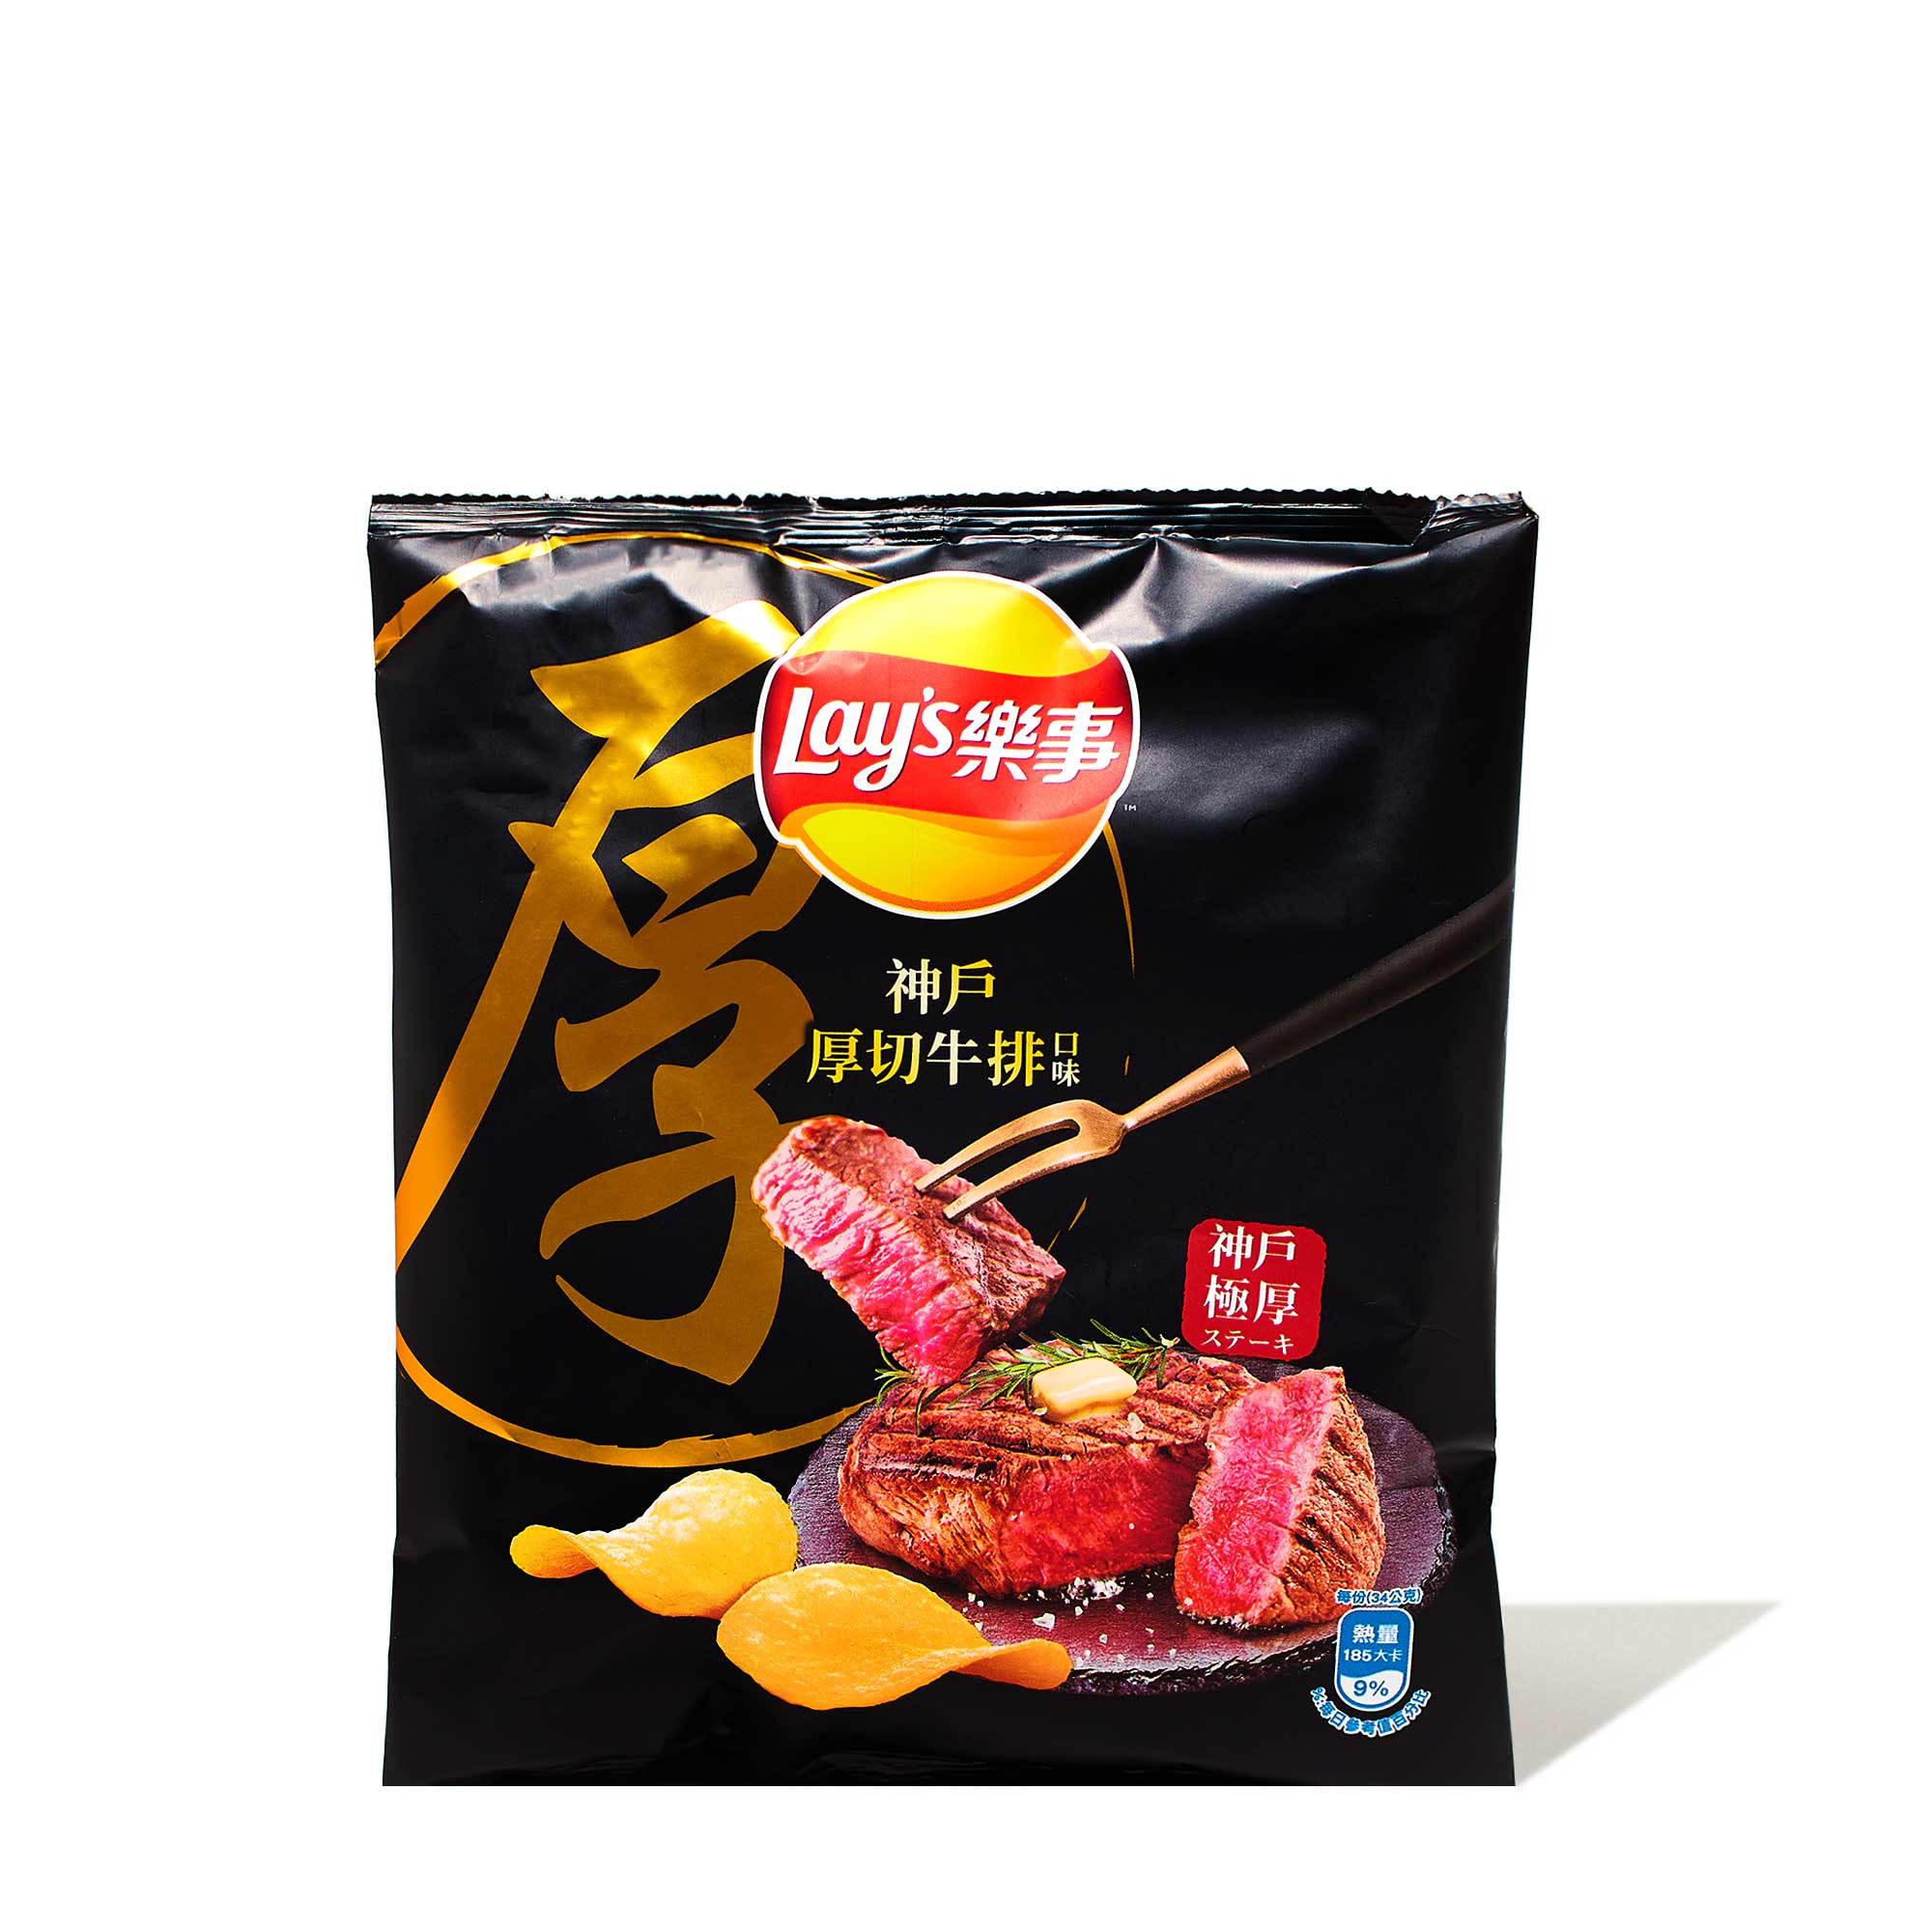 Snacks Chocoflakes Crisp Ball Nissin Cisco - Meccha Japan